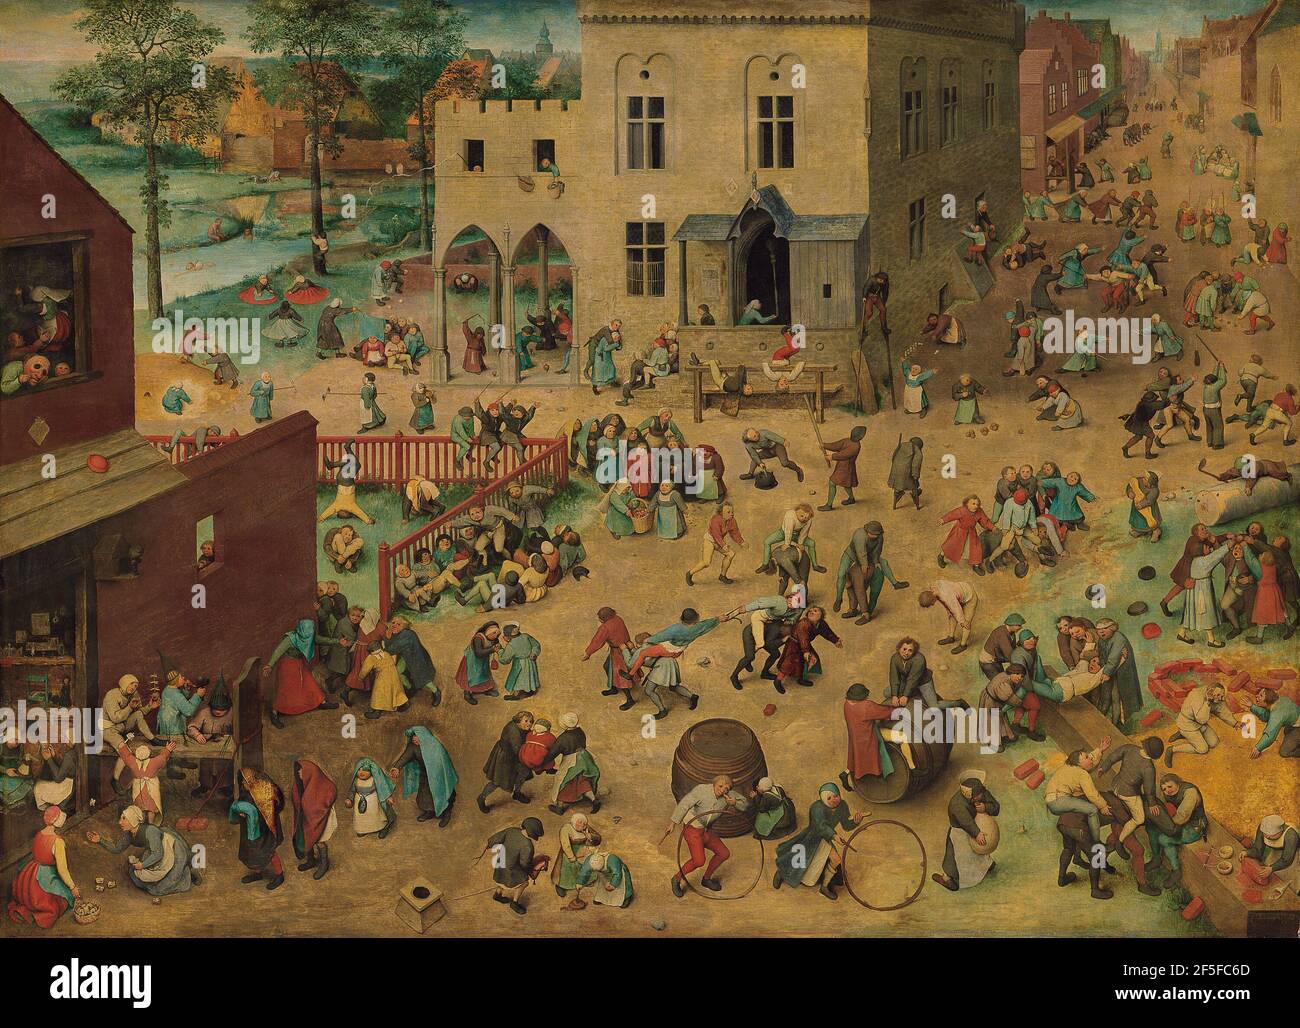 Title: Children's Games Creator:  Pieter Bruegel the Elder Date: 1560 Medium: Oil on canvas Dimensions:118x161 cms Location: Kunsthistorisches Museum, Vienna, Austria Stock Photo